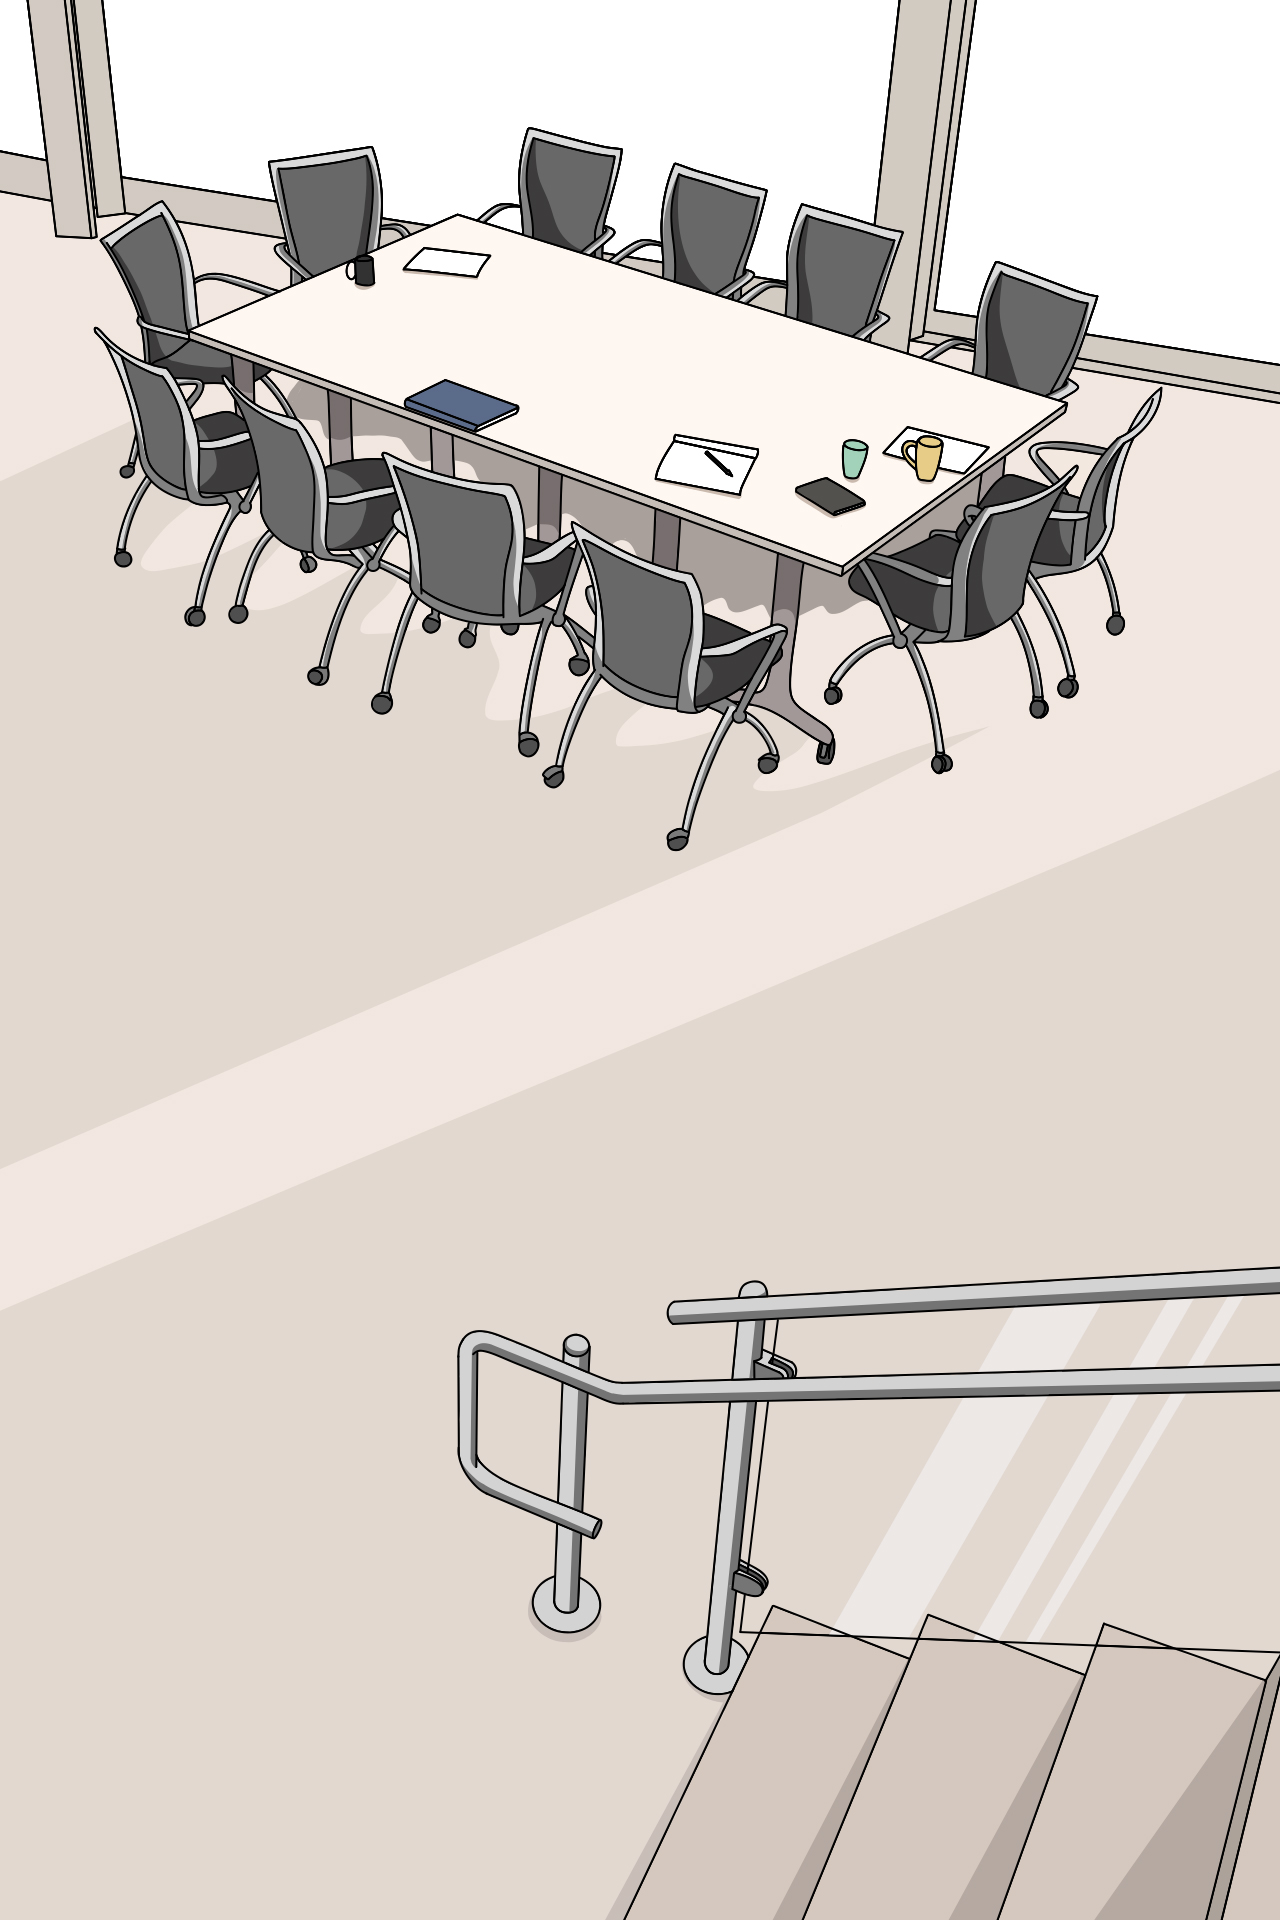 Board evaluations. Illustration of a boardroom